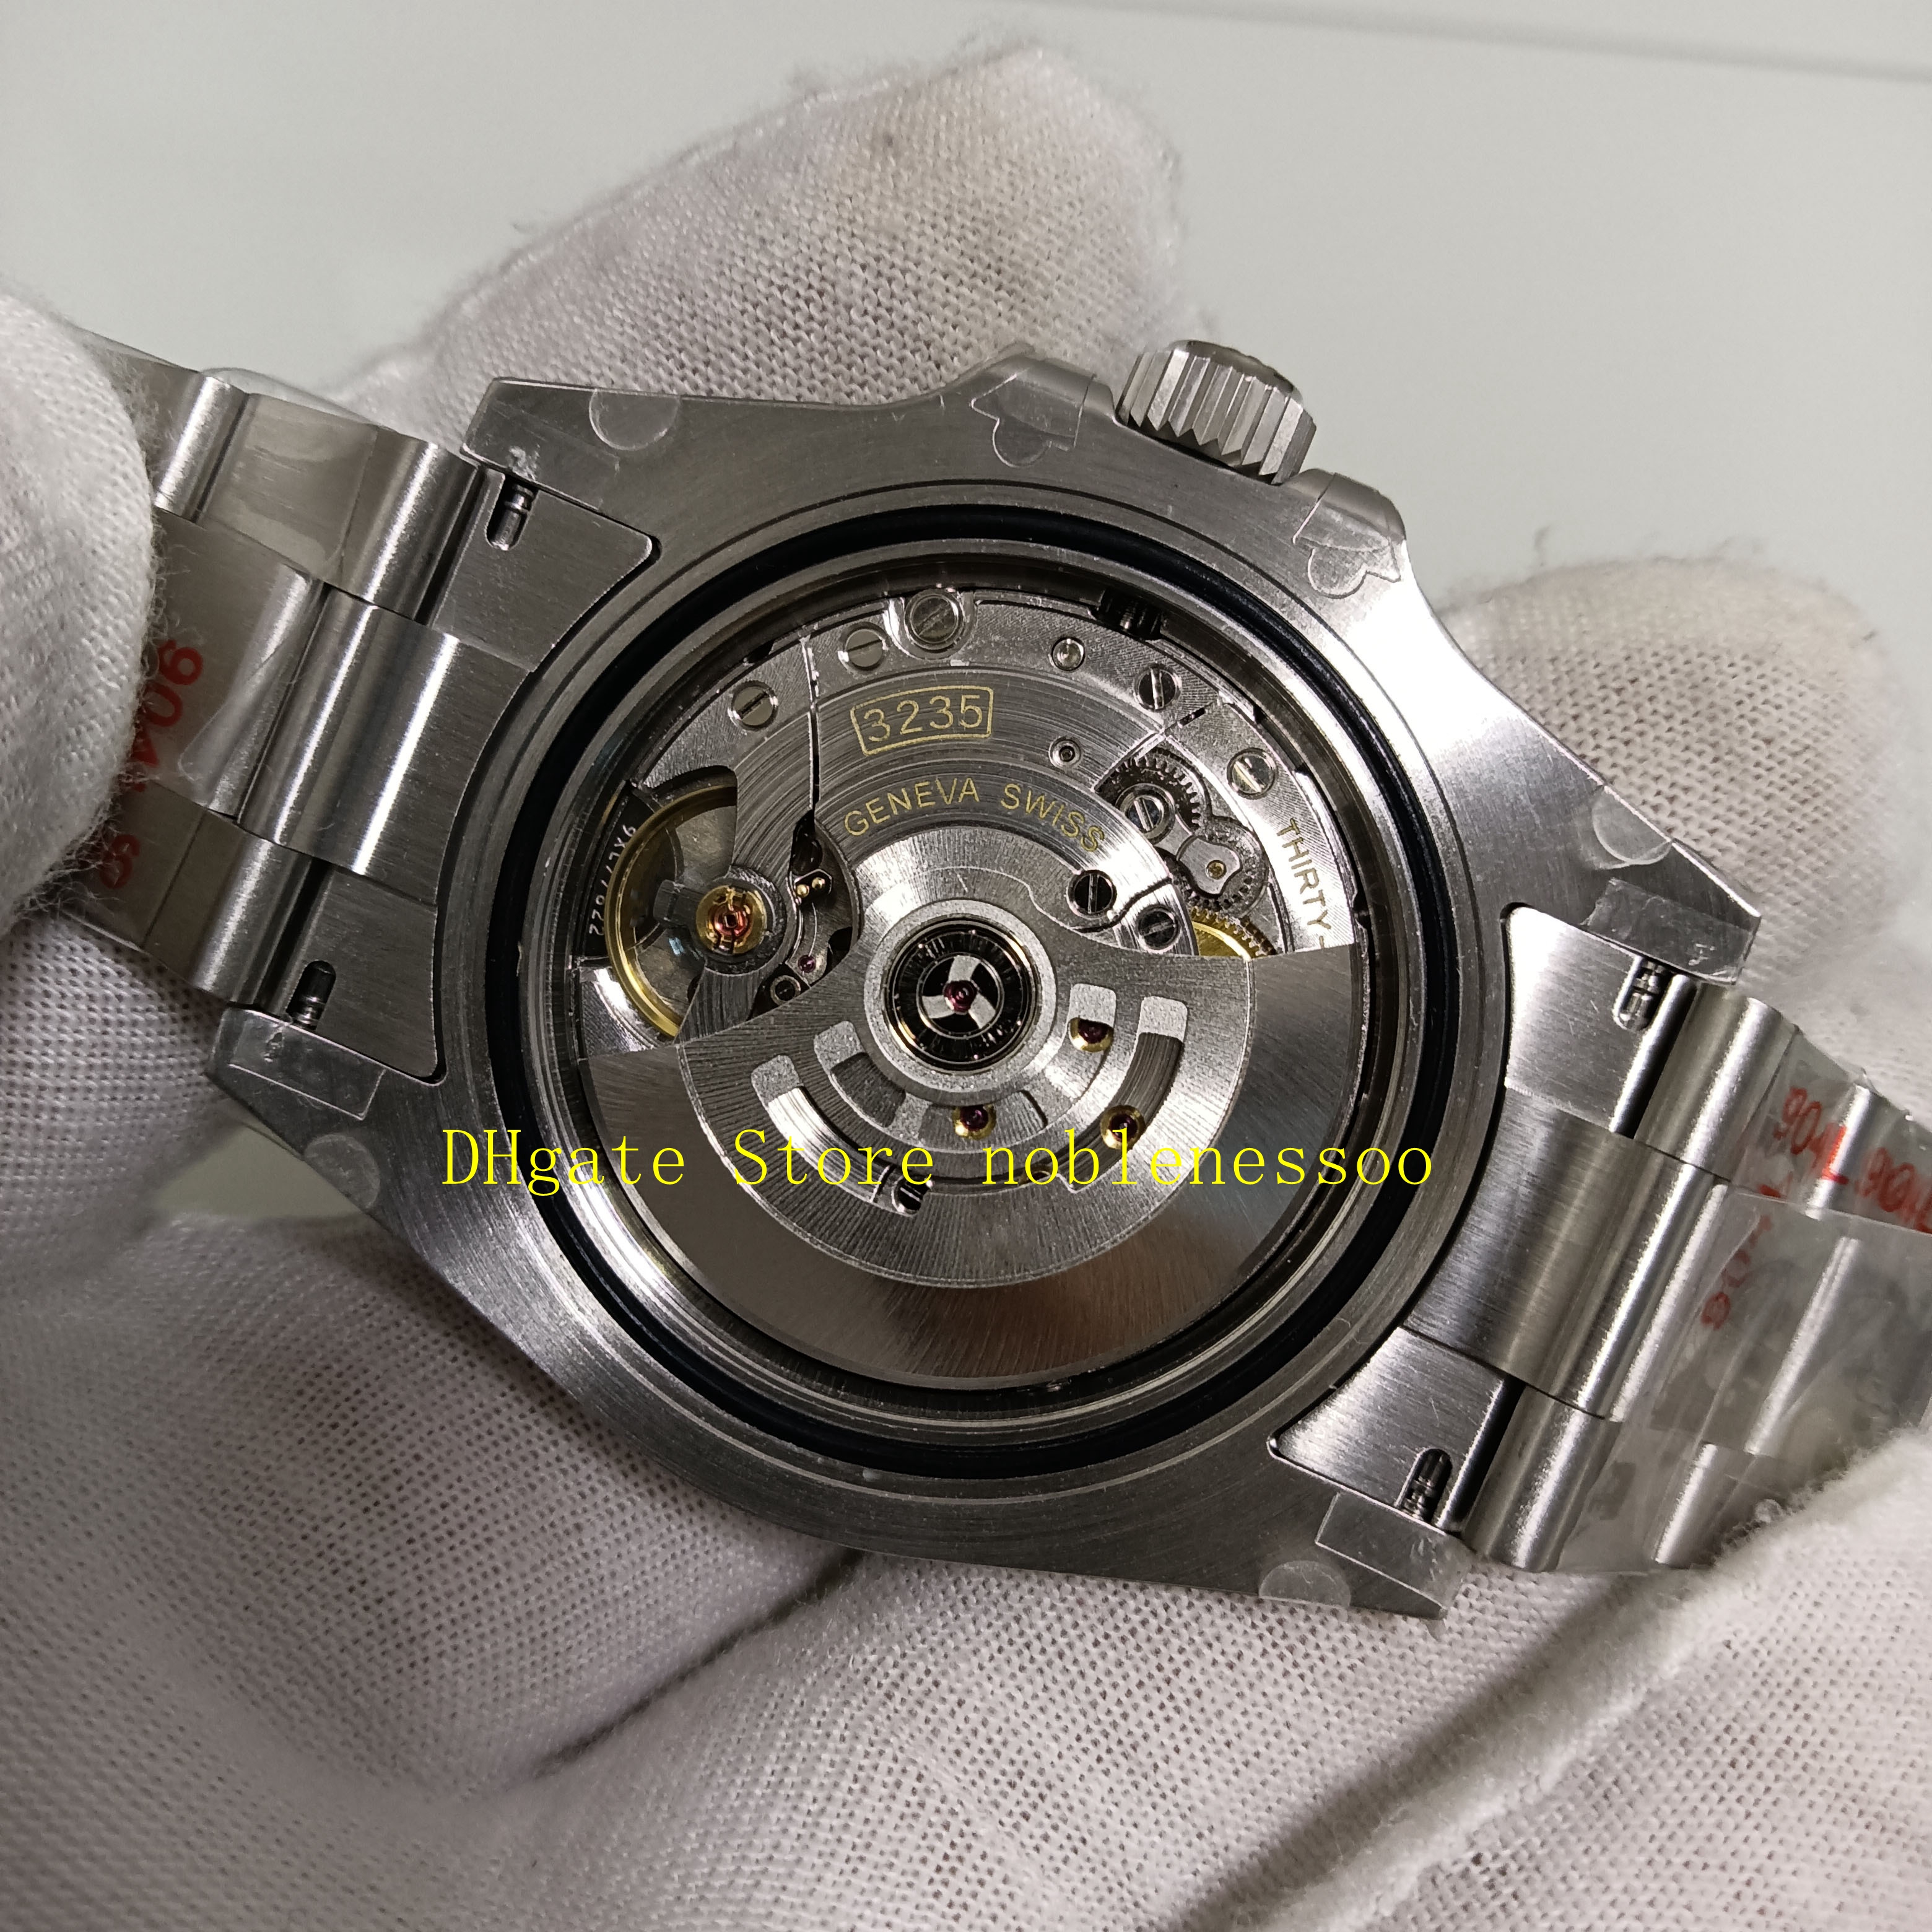 Real Po 904L Steel 41mm Watch Men Automatic Date Black Ceramic Bezel V12 Version Luminous Diving Cal 3235 Movement Wate260q